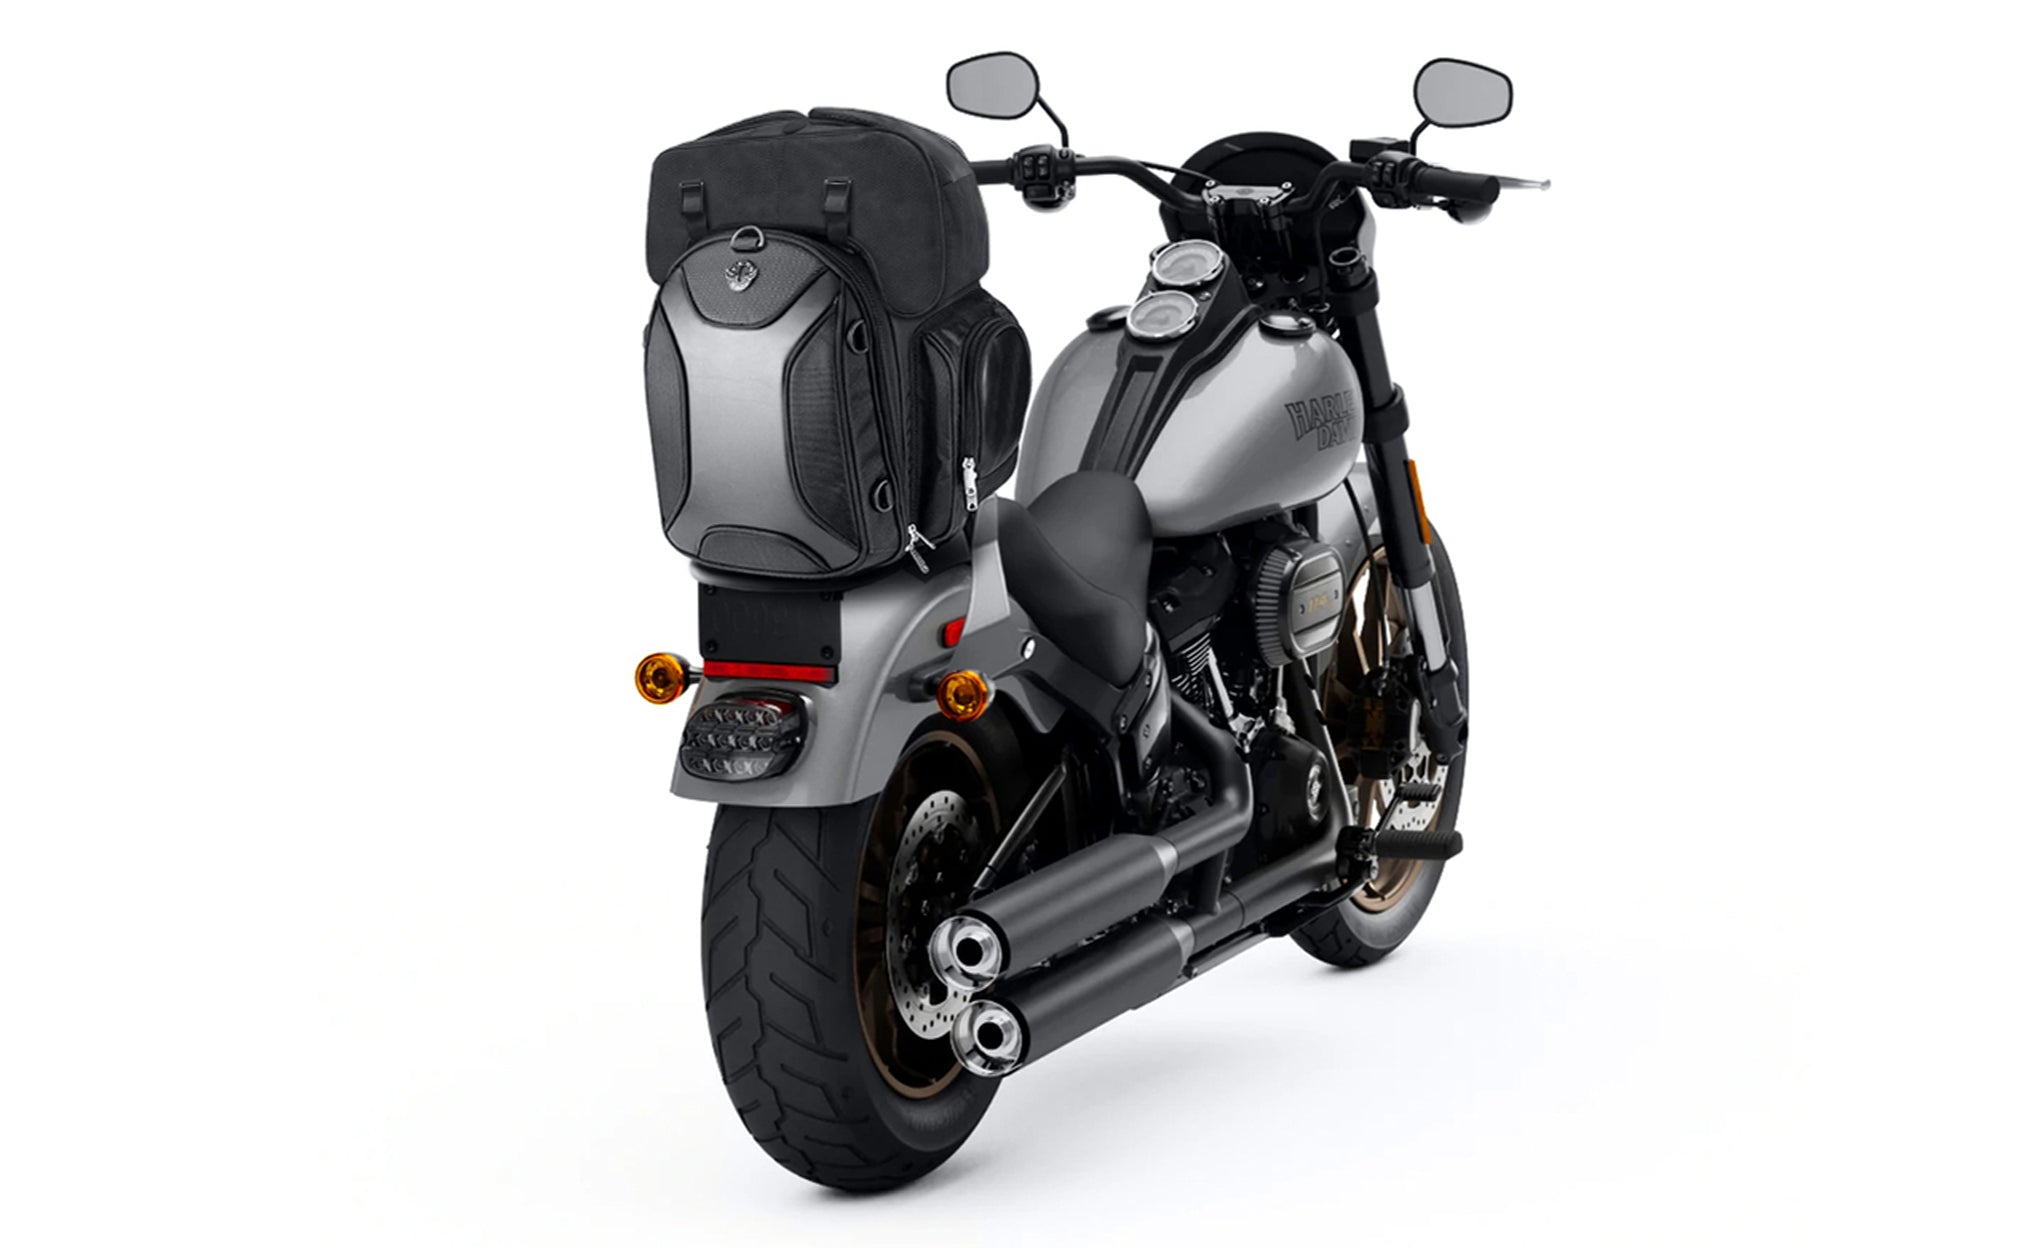 Viking Dagr Extra Large Motorcycle Sissy Bar Bag for Harley Davidson Bag on Bike View @expand